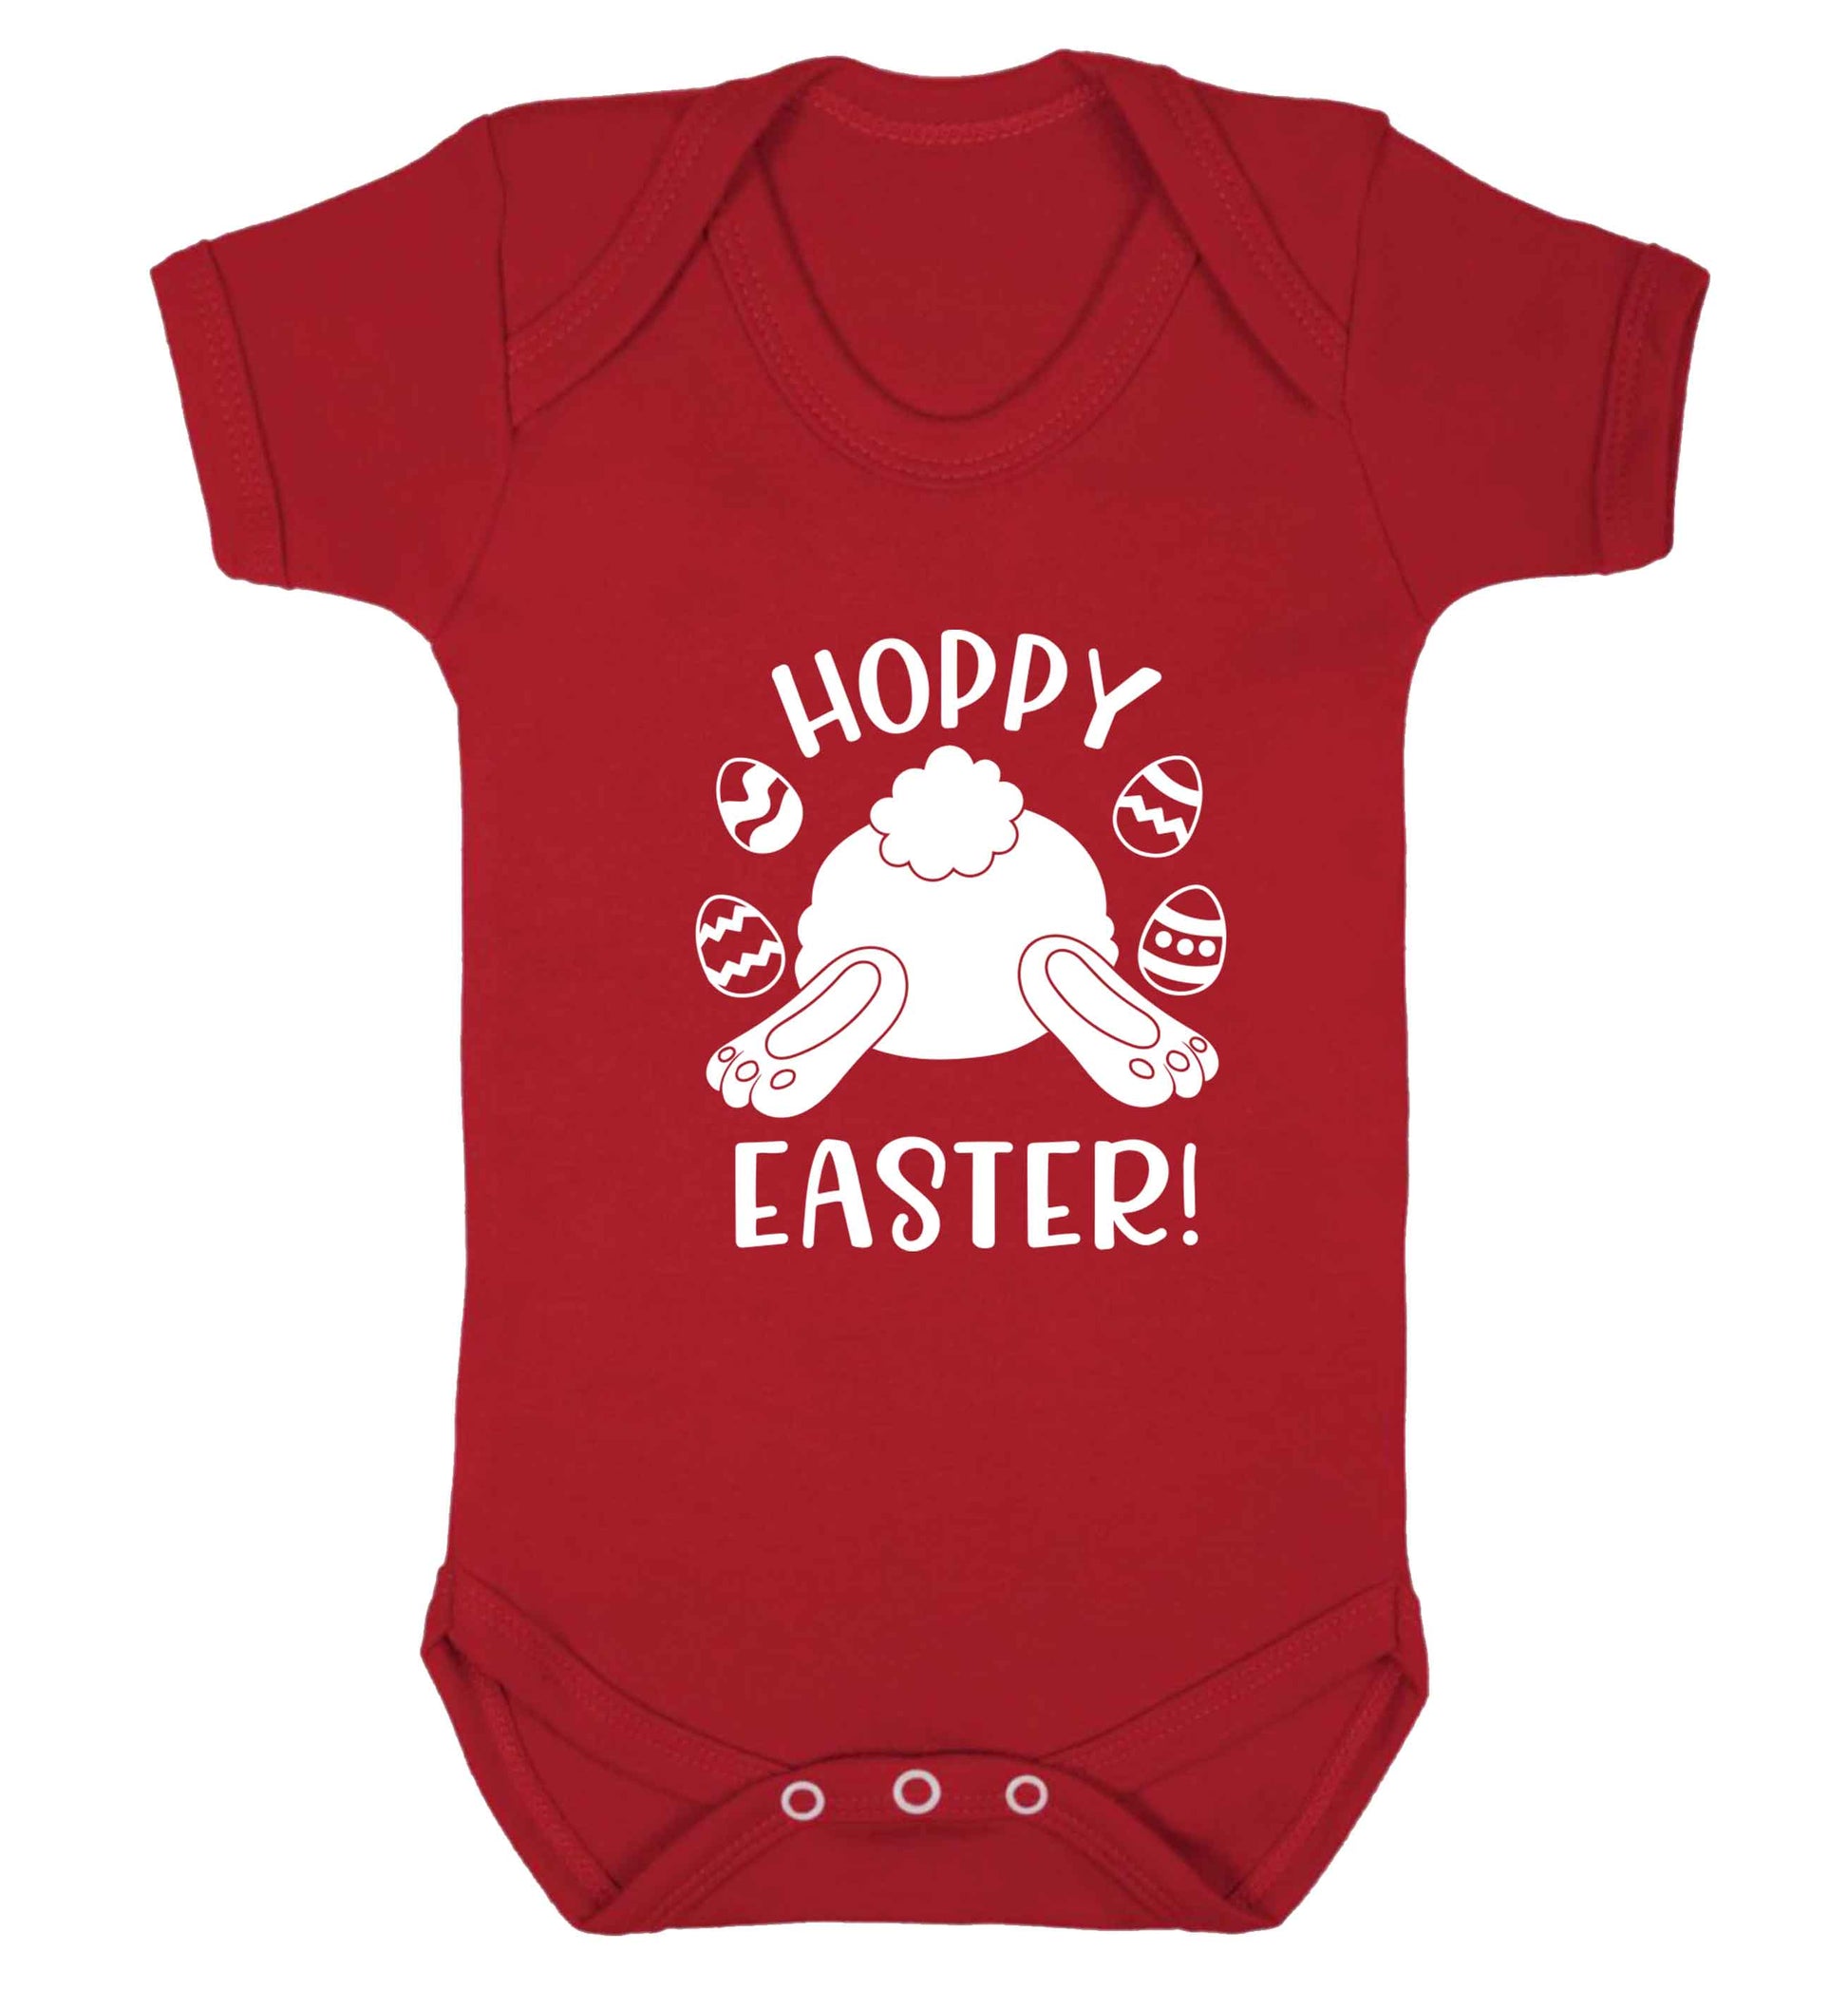 Hoppy Easter baby vest red 18-24 months